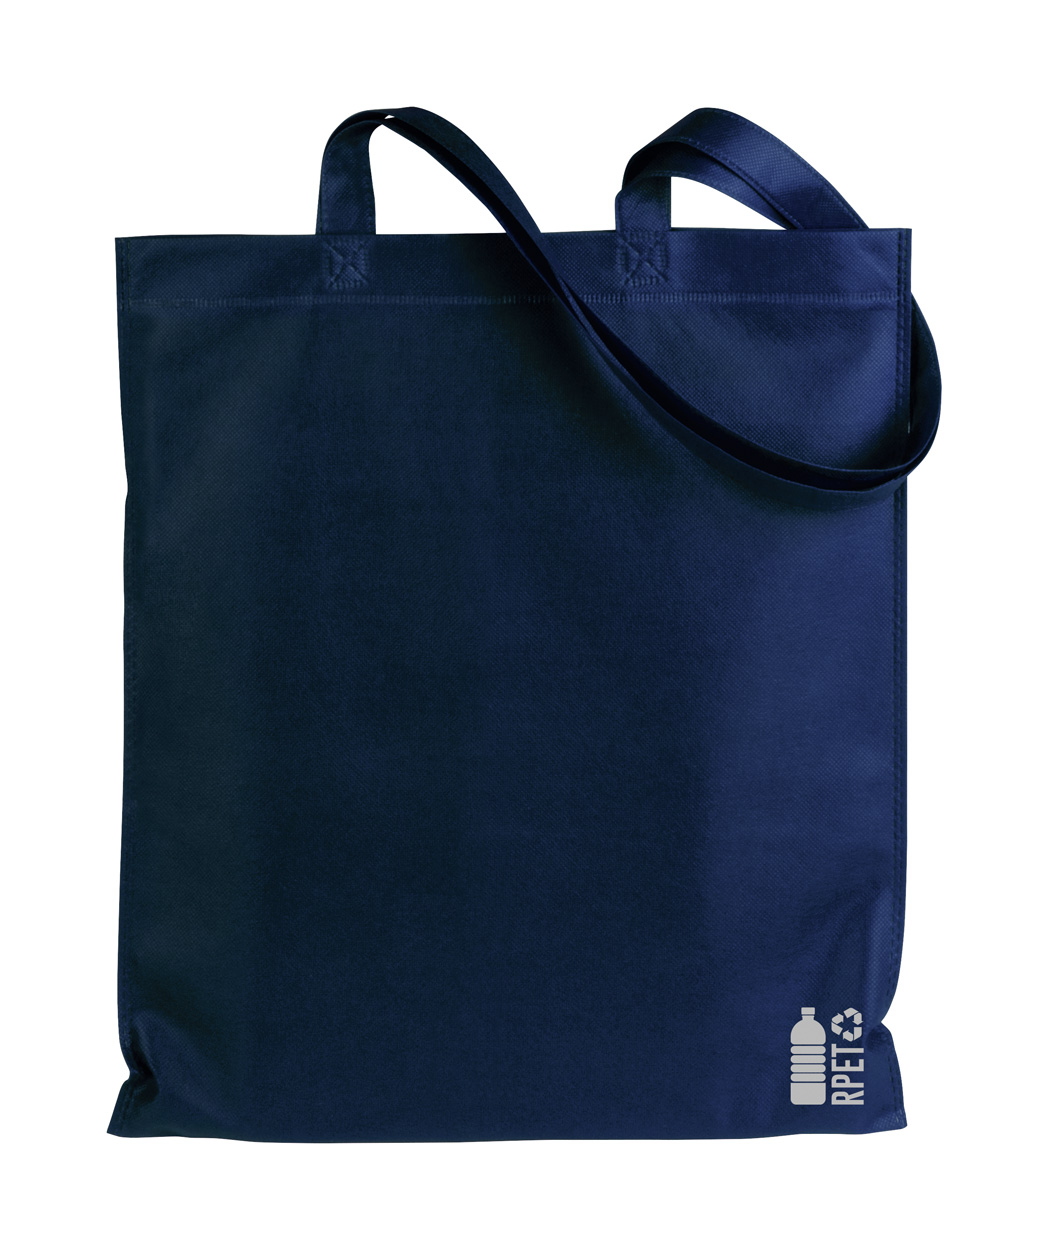 Rezzin RPET shopping bag - blue